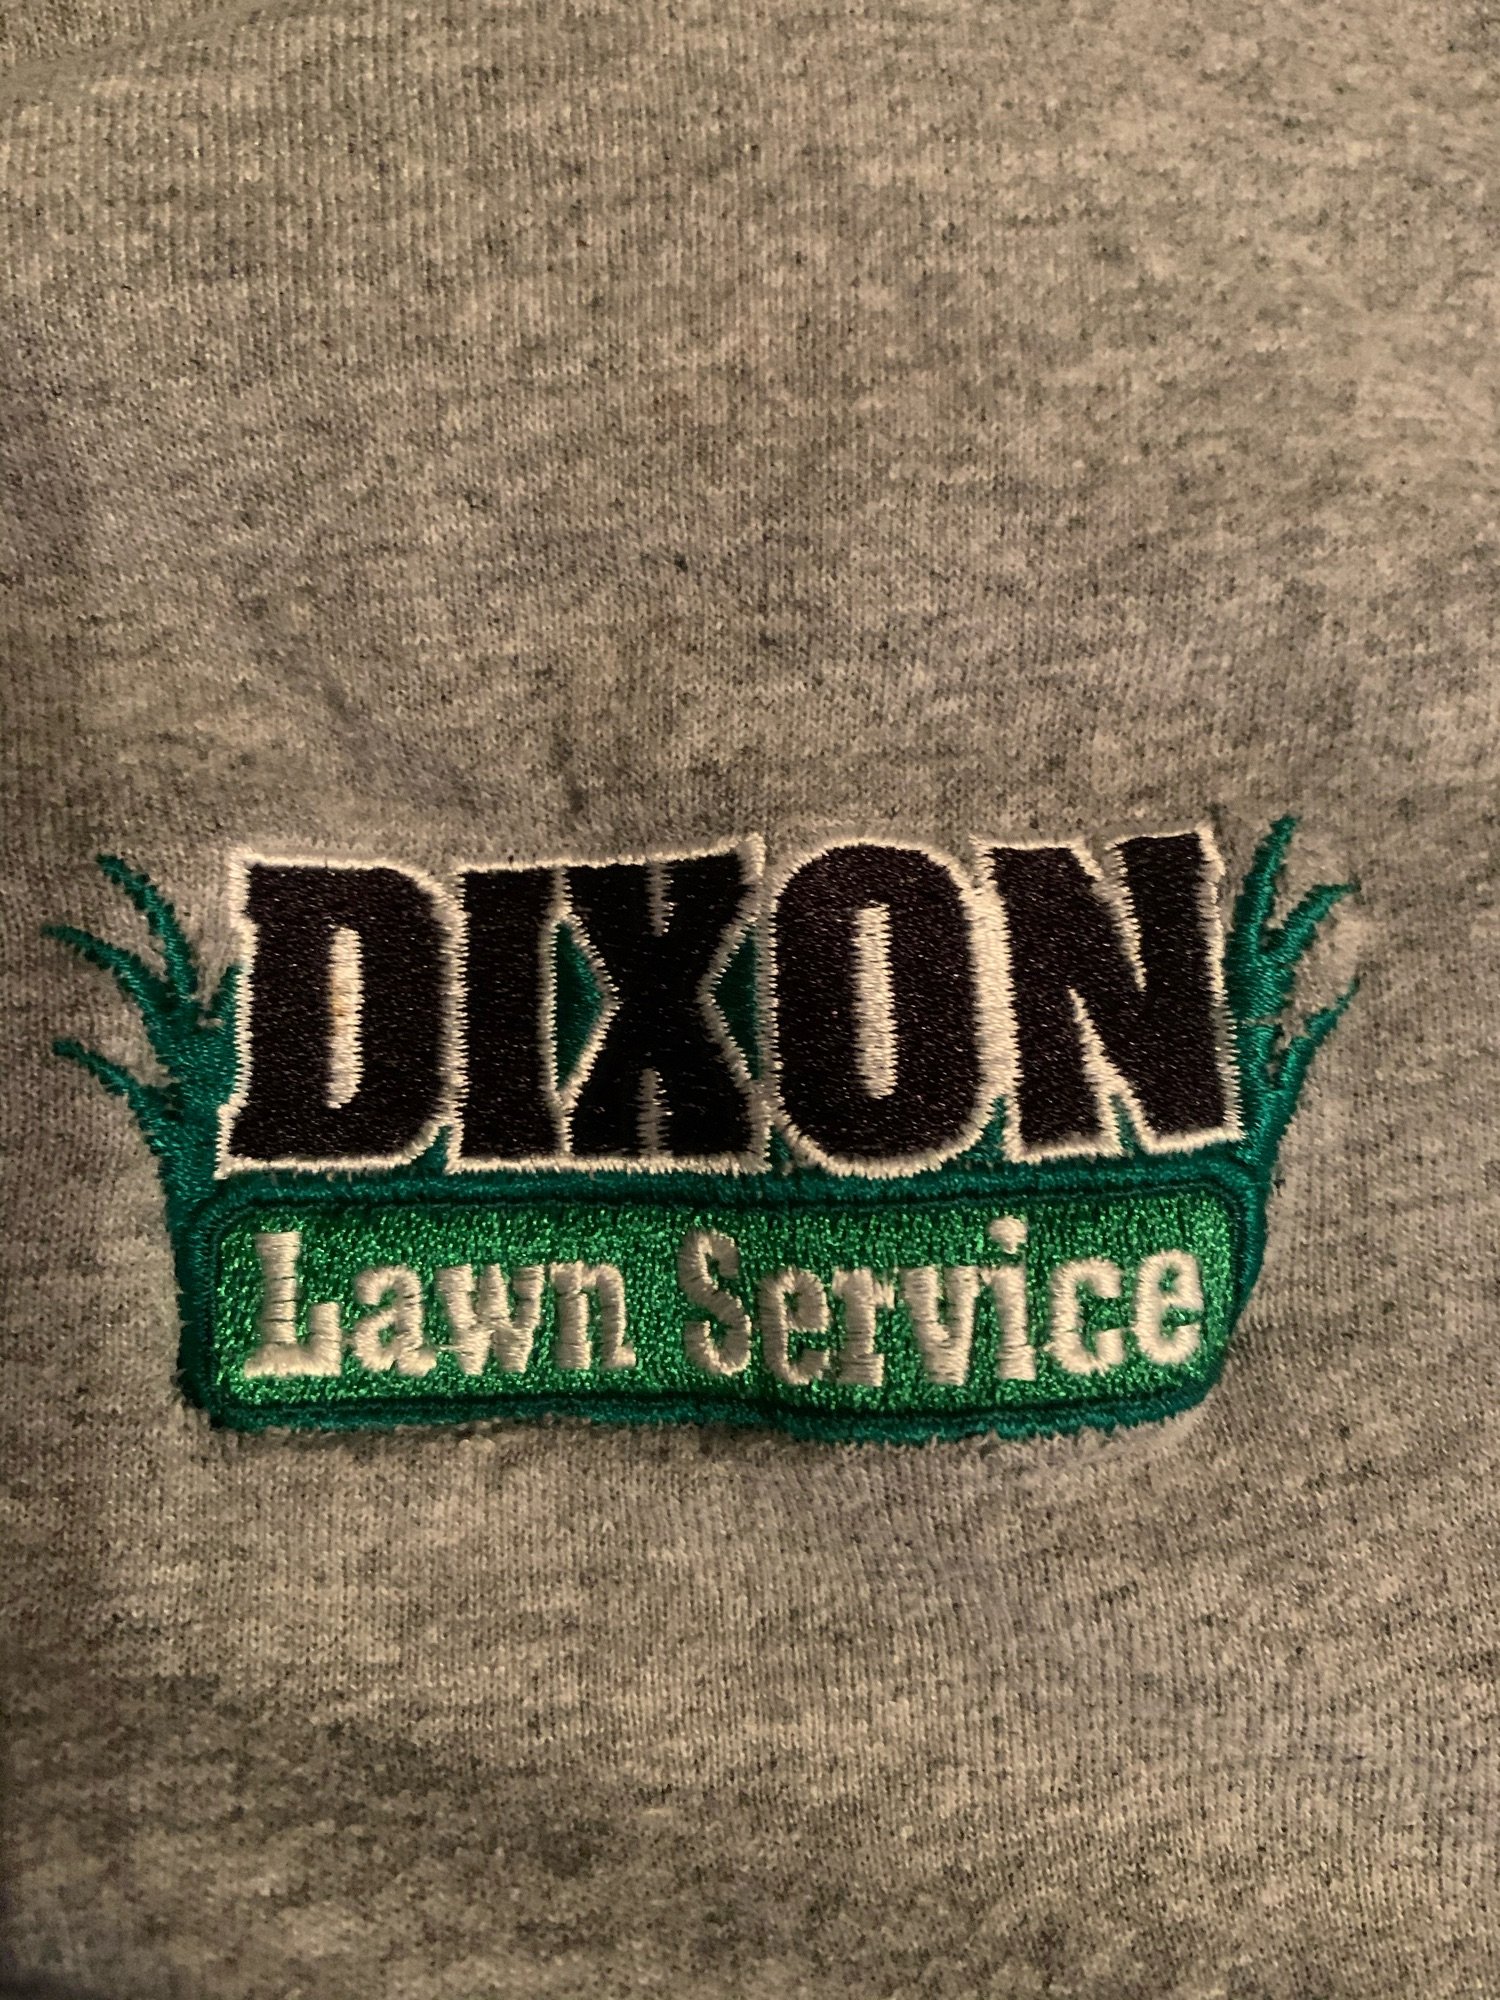 Dixon Lawn Service Logo